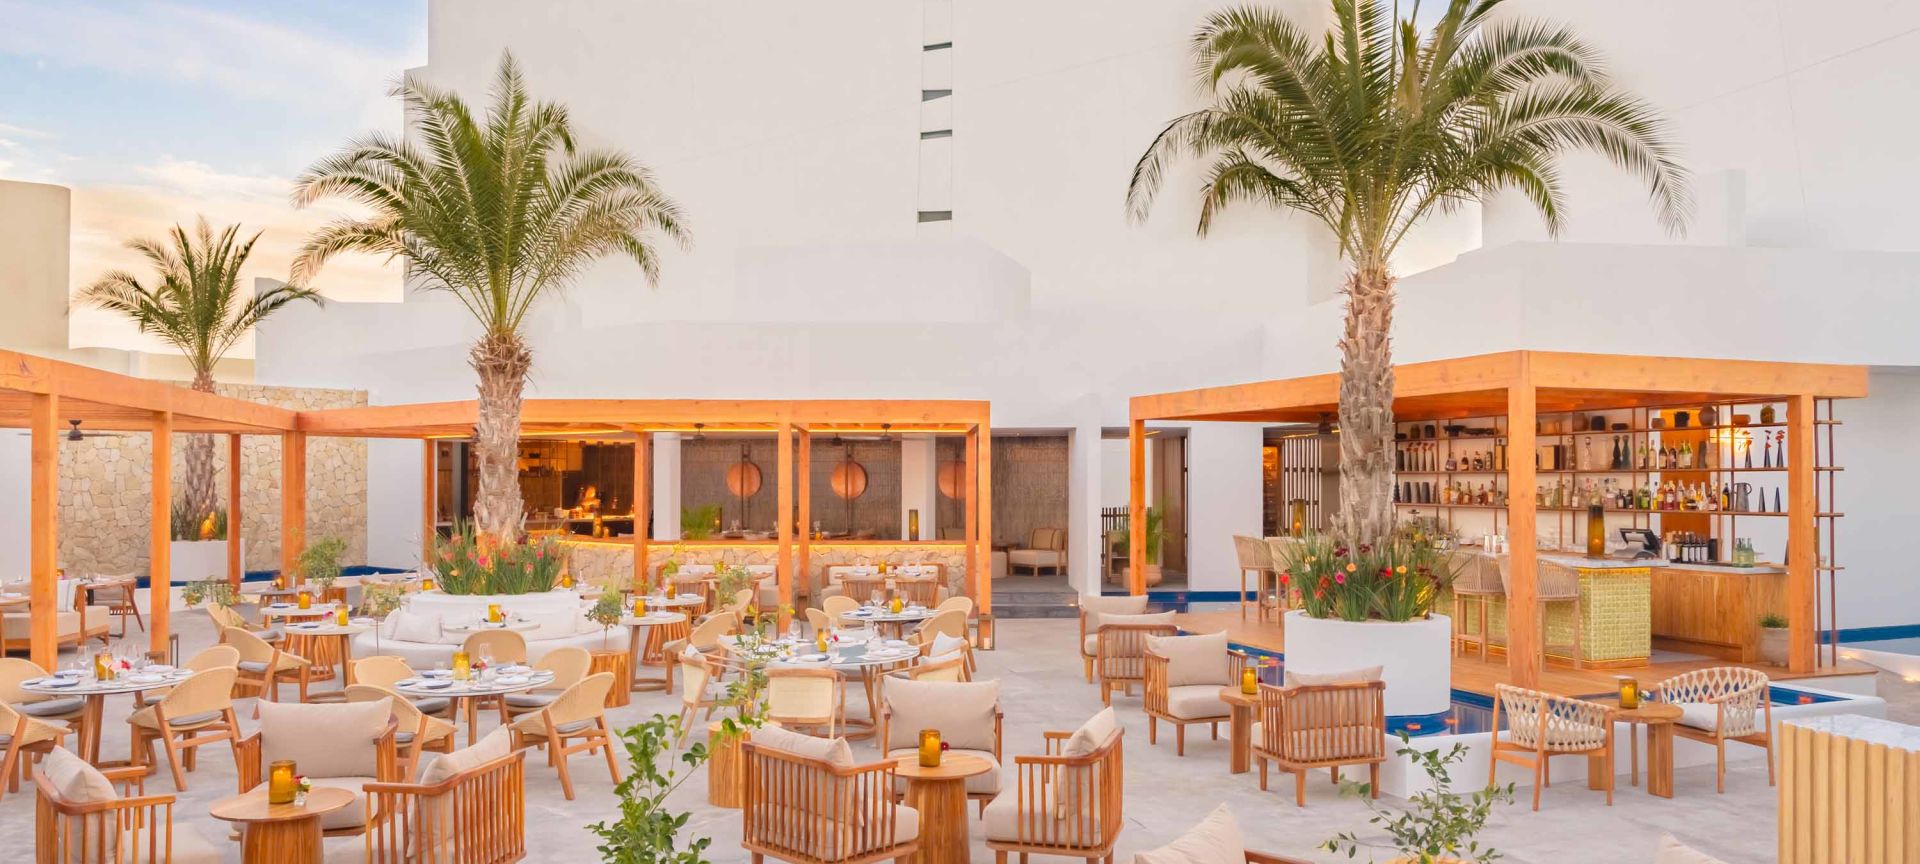 Dalia Restaurant at Viceroy Los Cabos